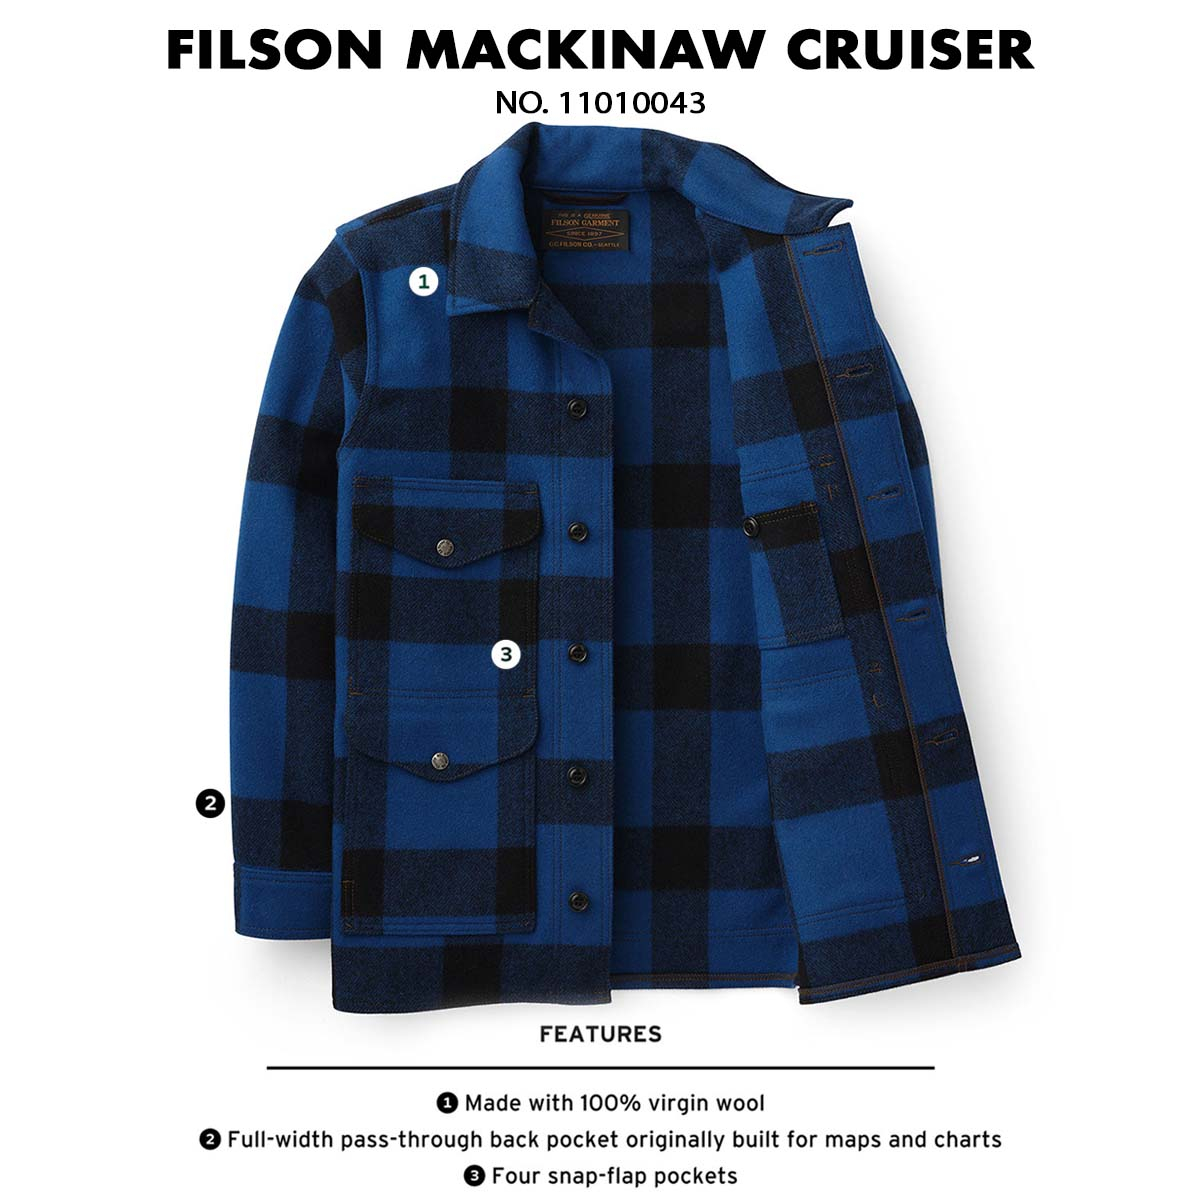 Filson Mackinaw Cruiser Jacket Cobalt Black, features